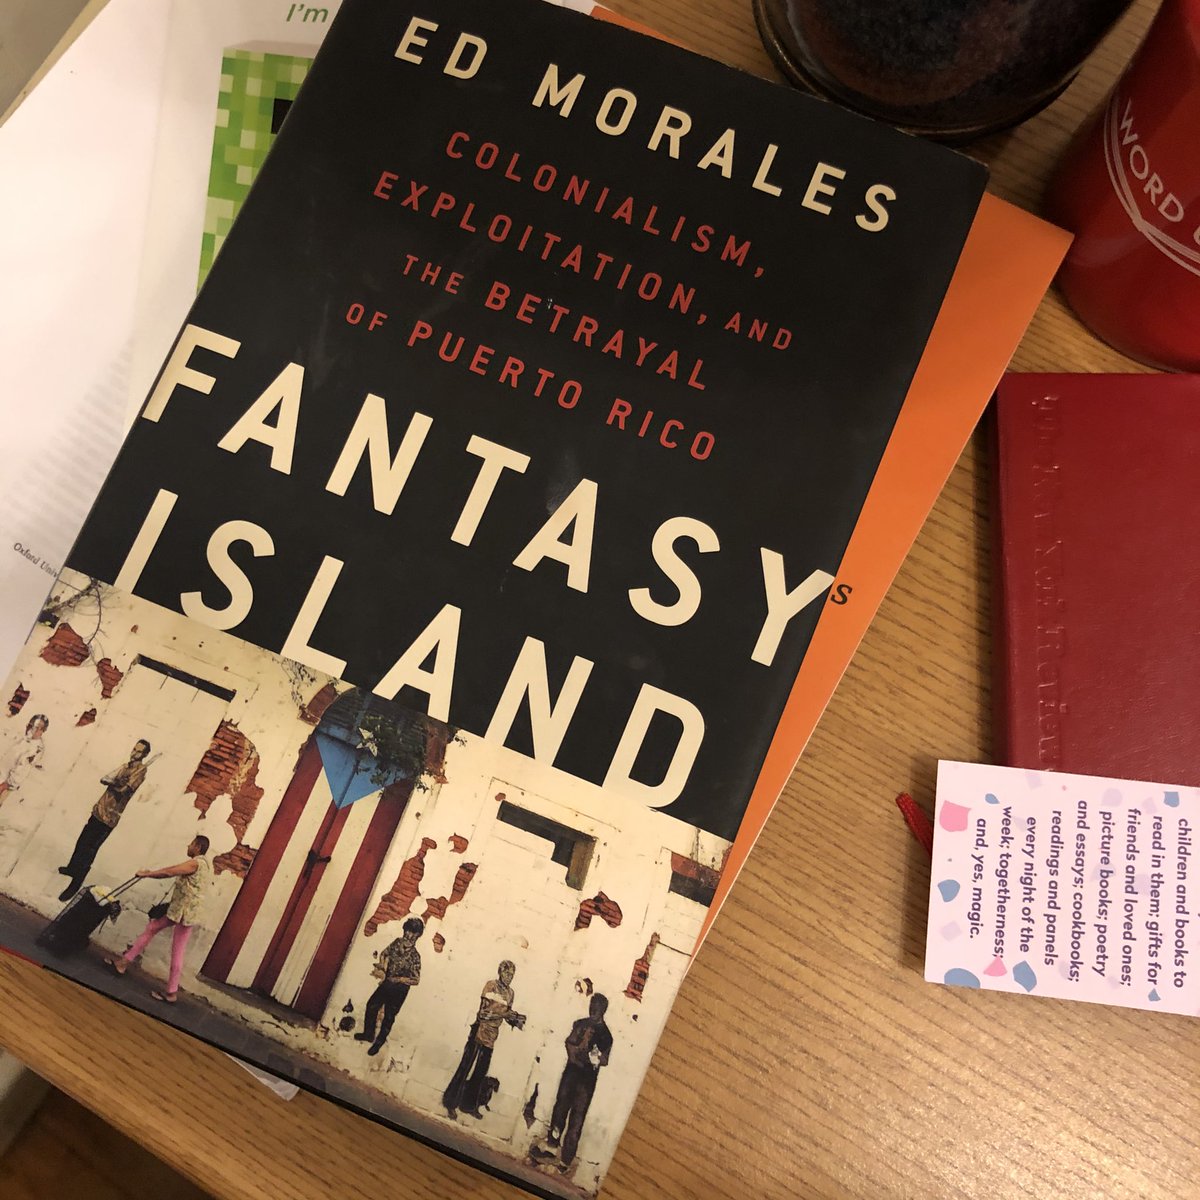 52.  Fantasy Island: Colonialism, Exploitation, and the Betrayal of Puerto Rico by Ed Morales